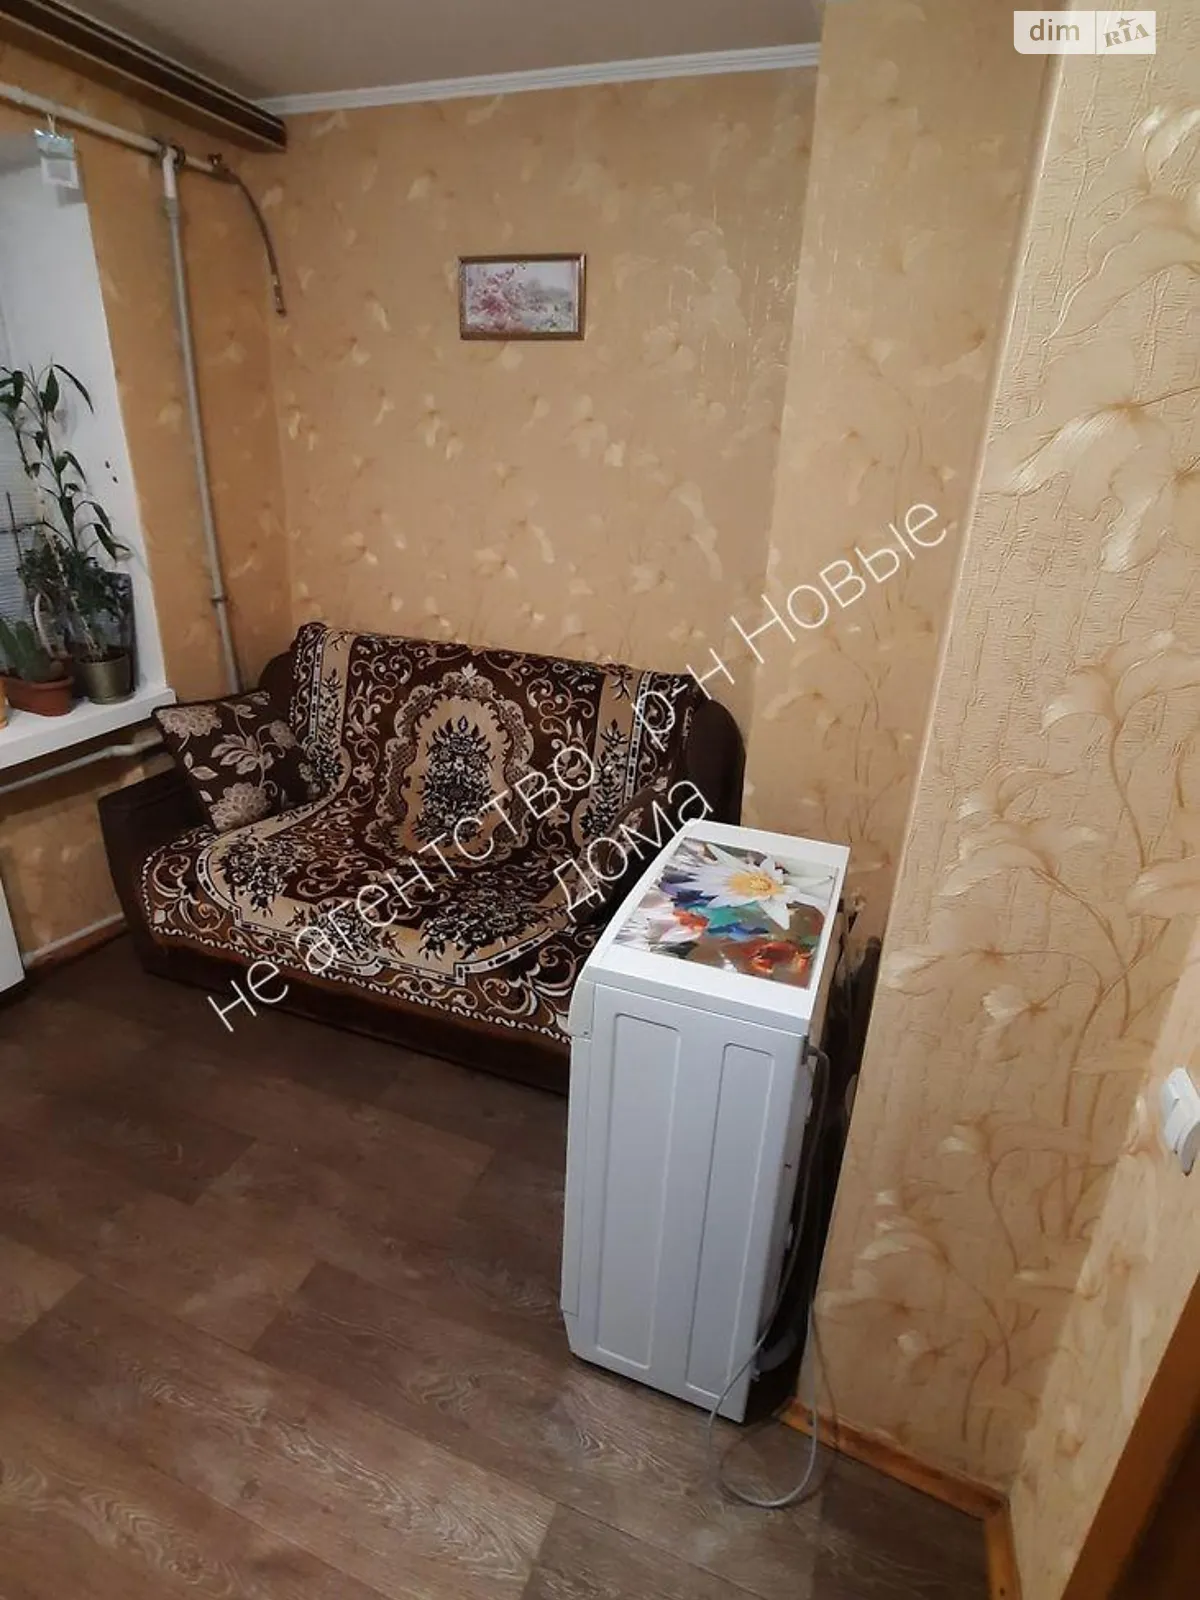 Сдается в аренду комната 15 кв. м в Харькове - фото 3